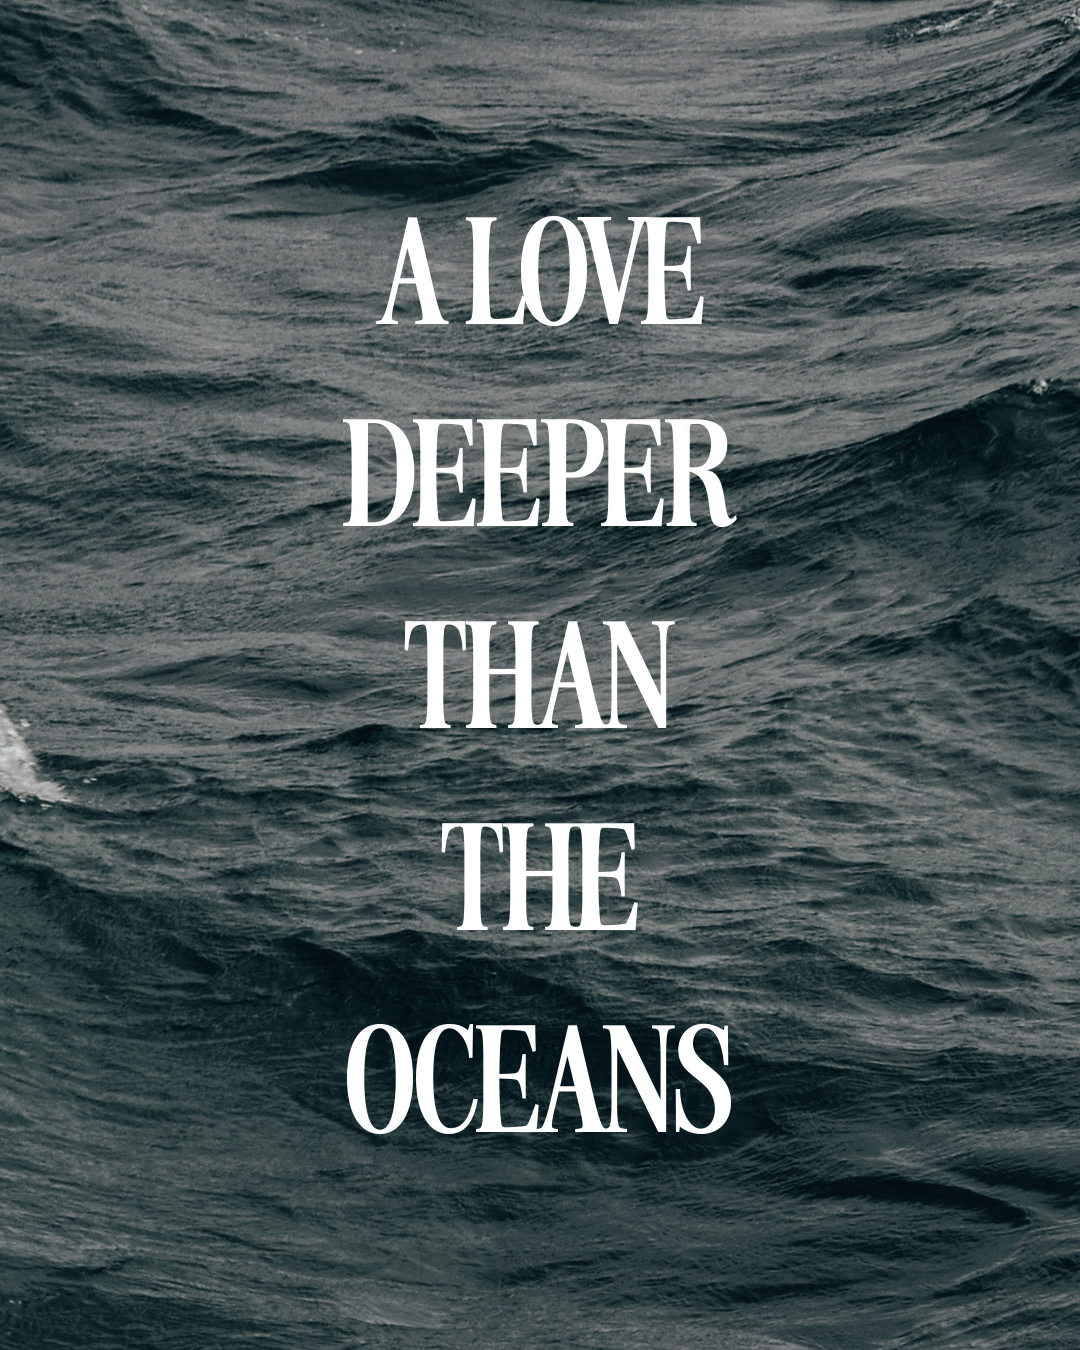 A love deeper than the oceans